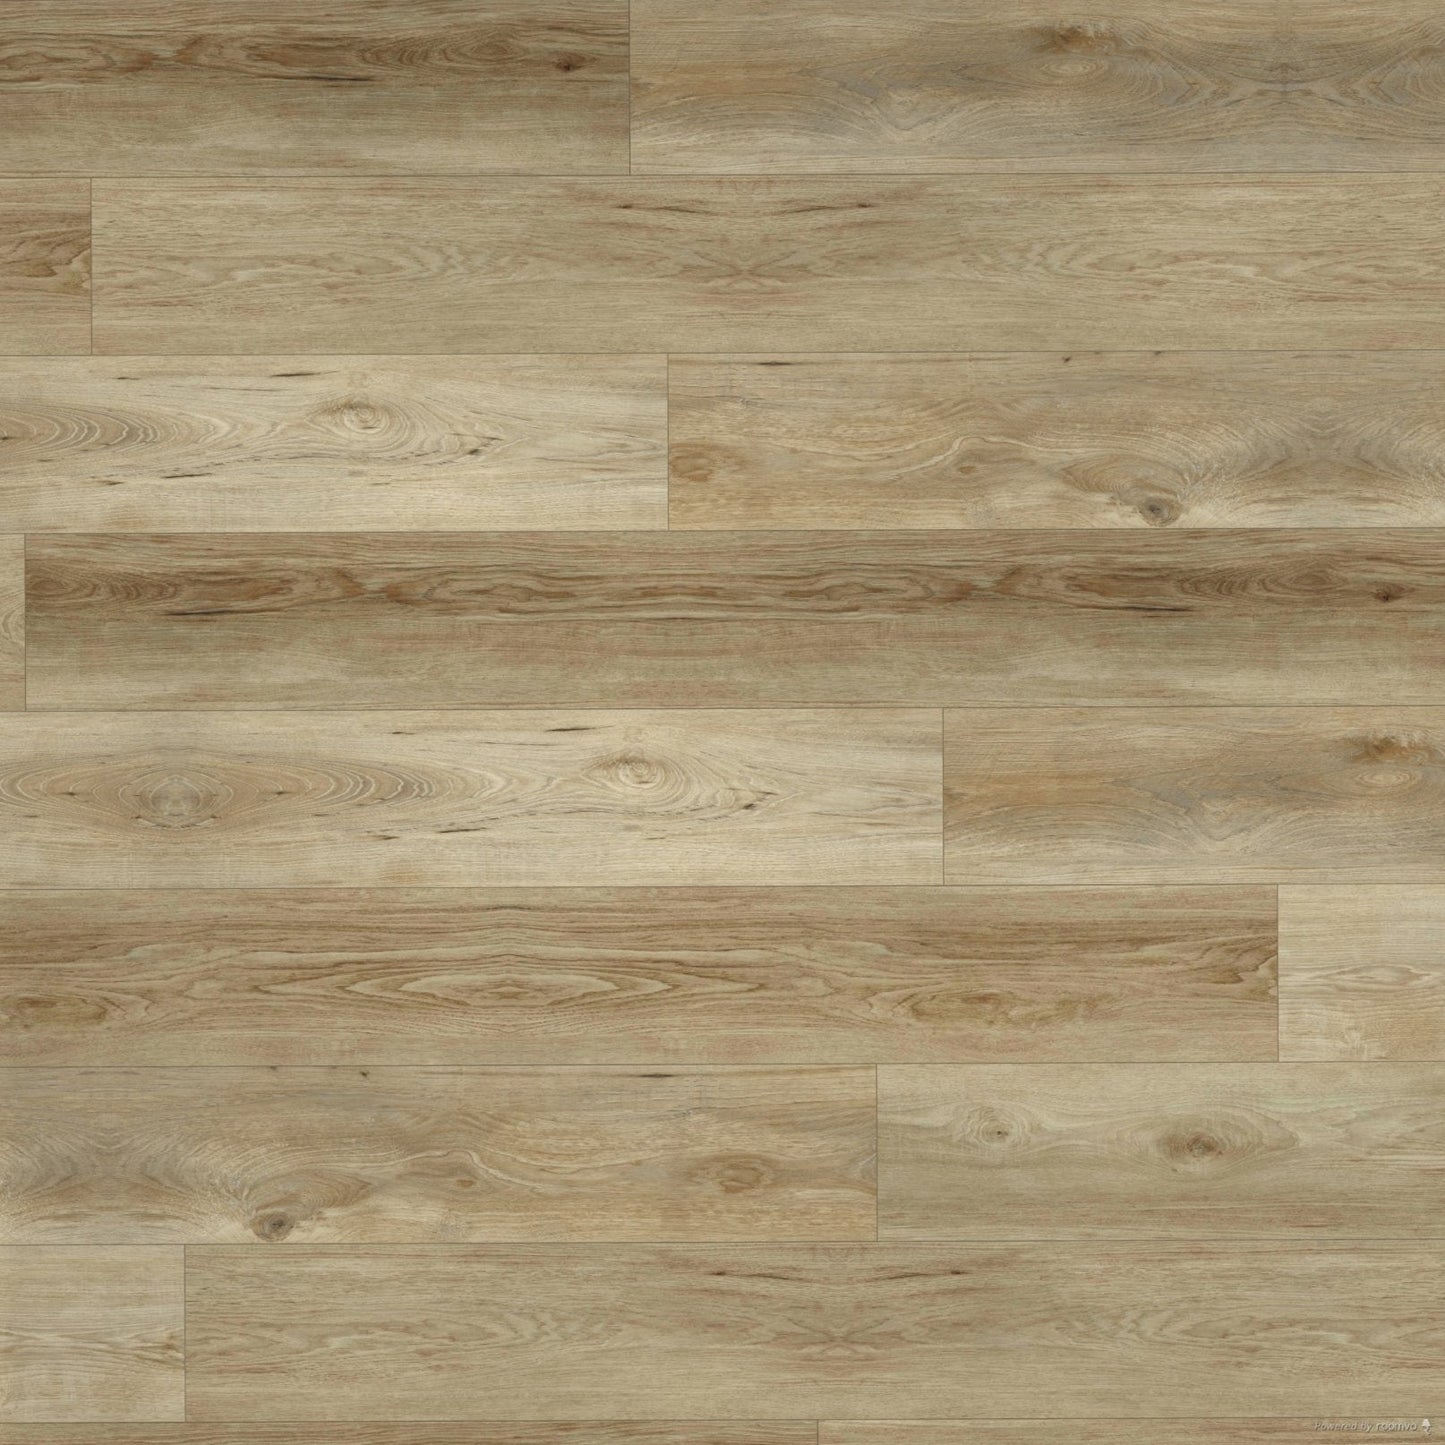 Angela Rose Elite Sonoma Hewn Stoneform luxury flooring plank swatch